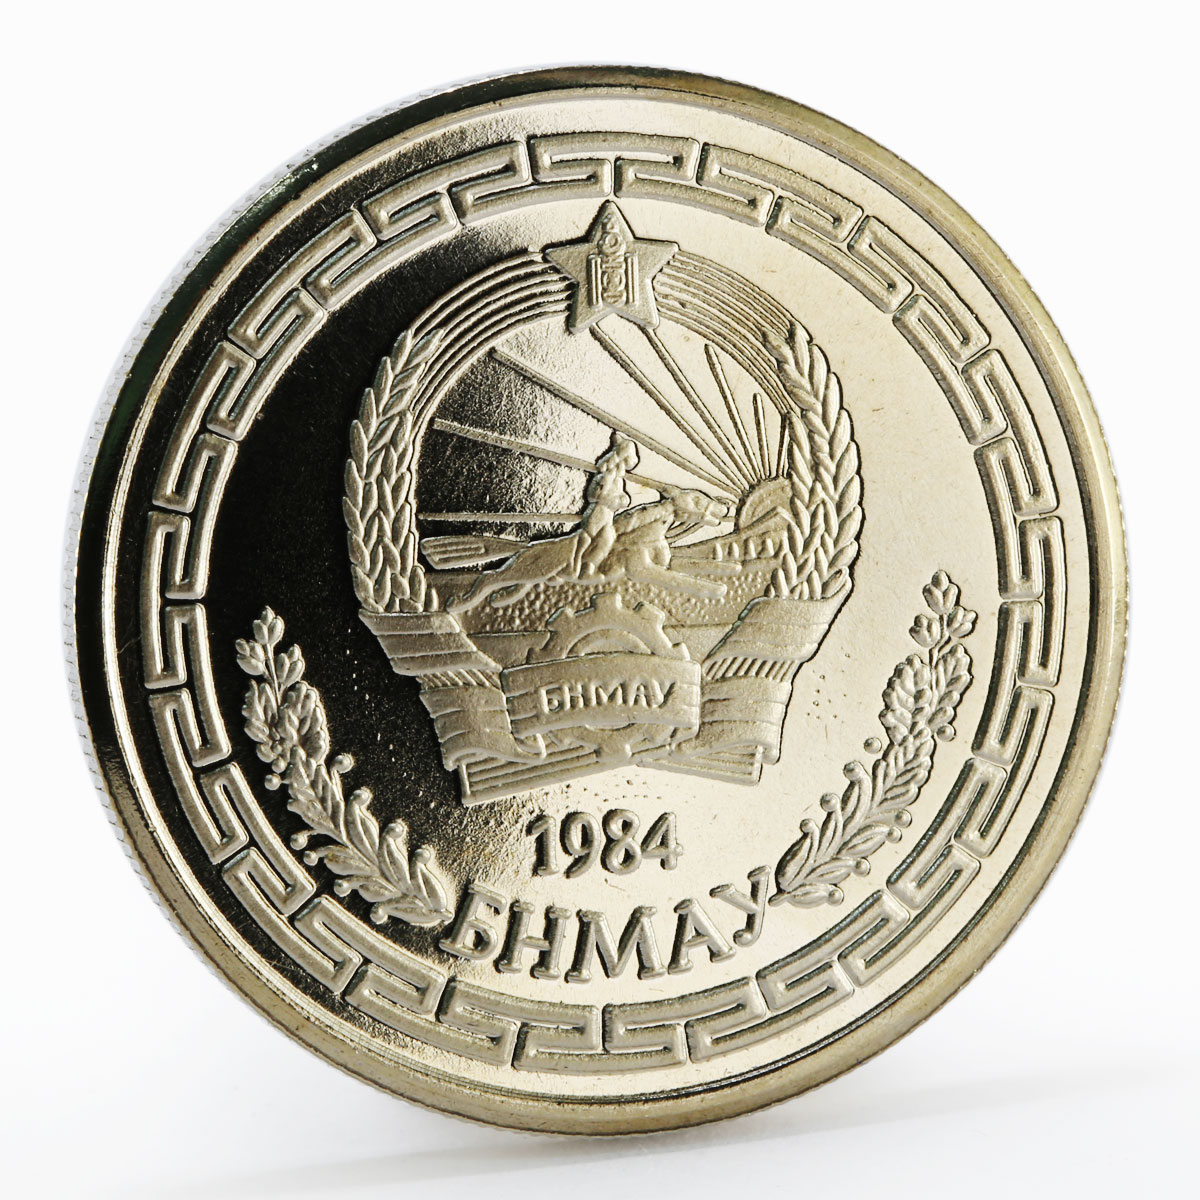 Mongolia 10 togrog International Games Equestrian proof nickel coin 1984